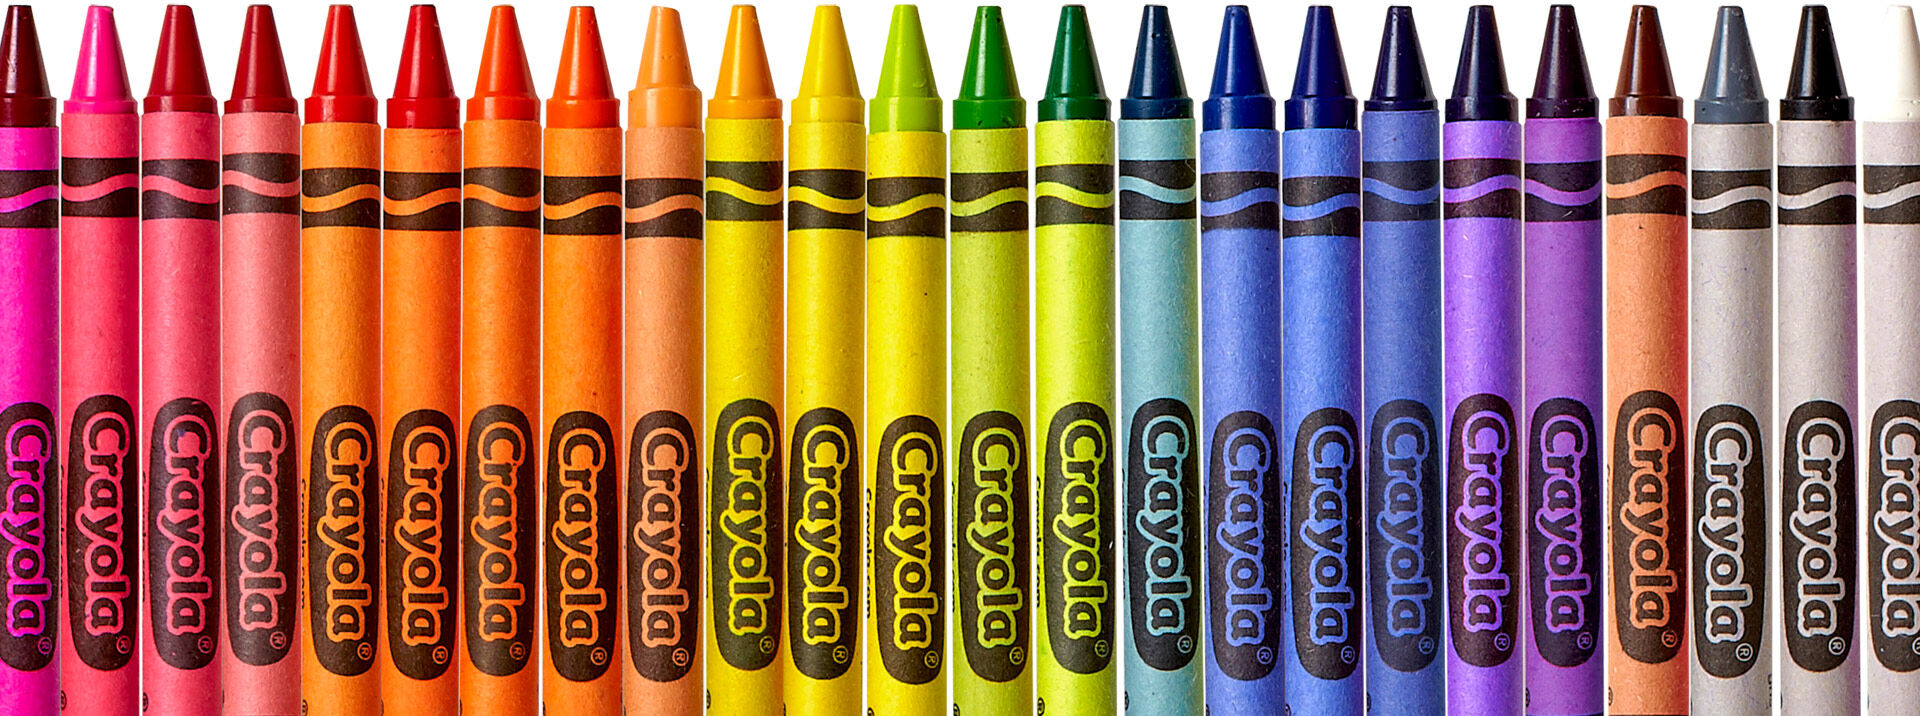 Crayola Crayons Shop Crayon Packs Boxes Crayola